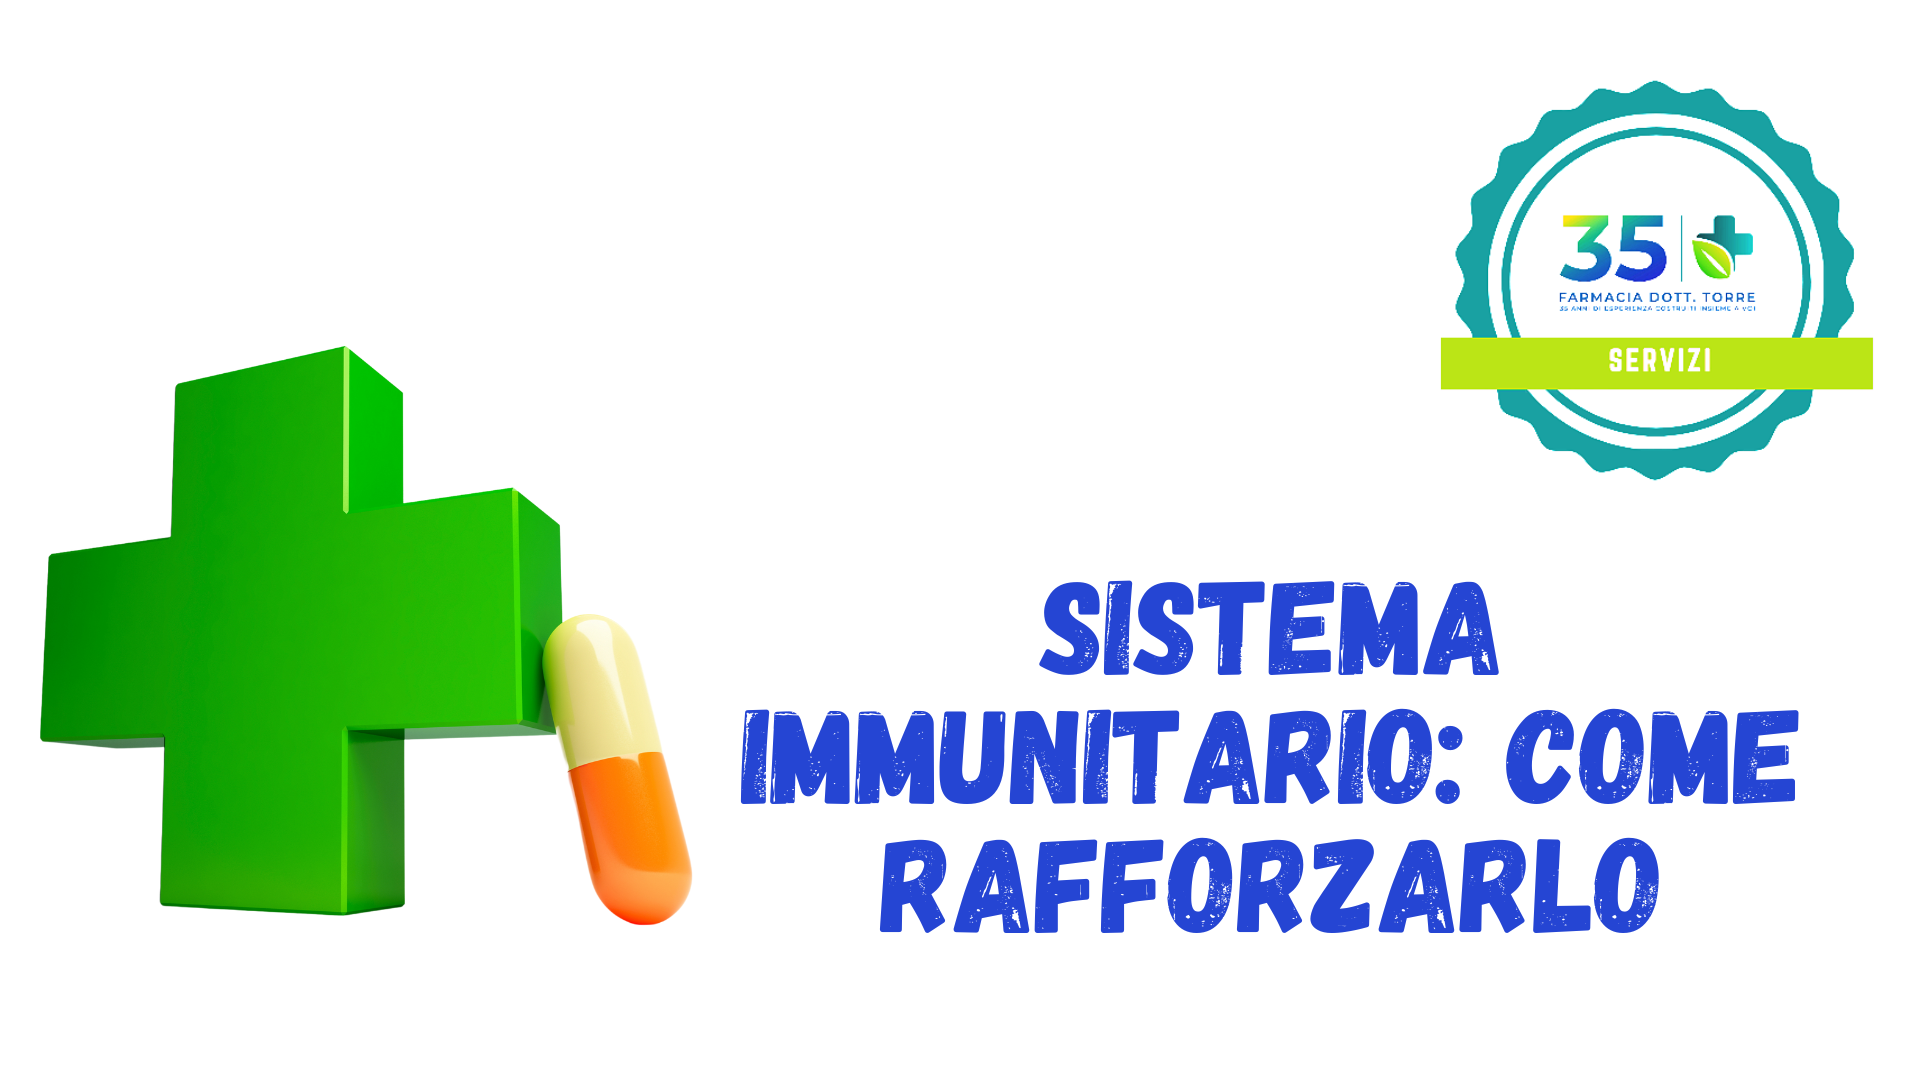 Sistema immunitario: come rafforzarlo